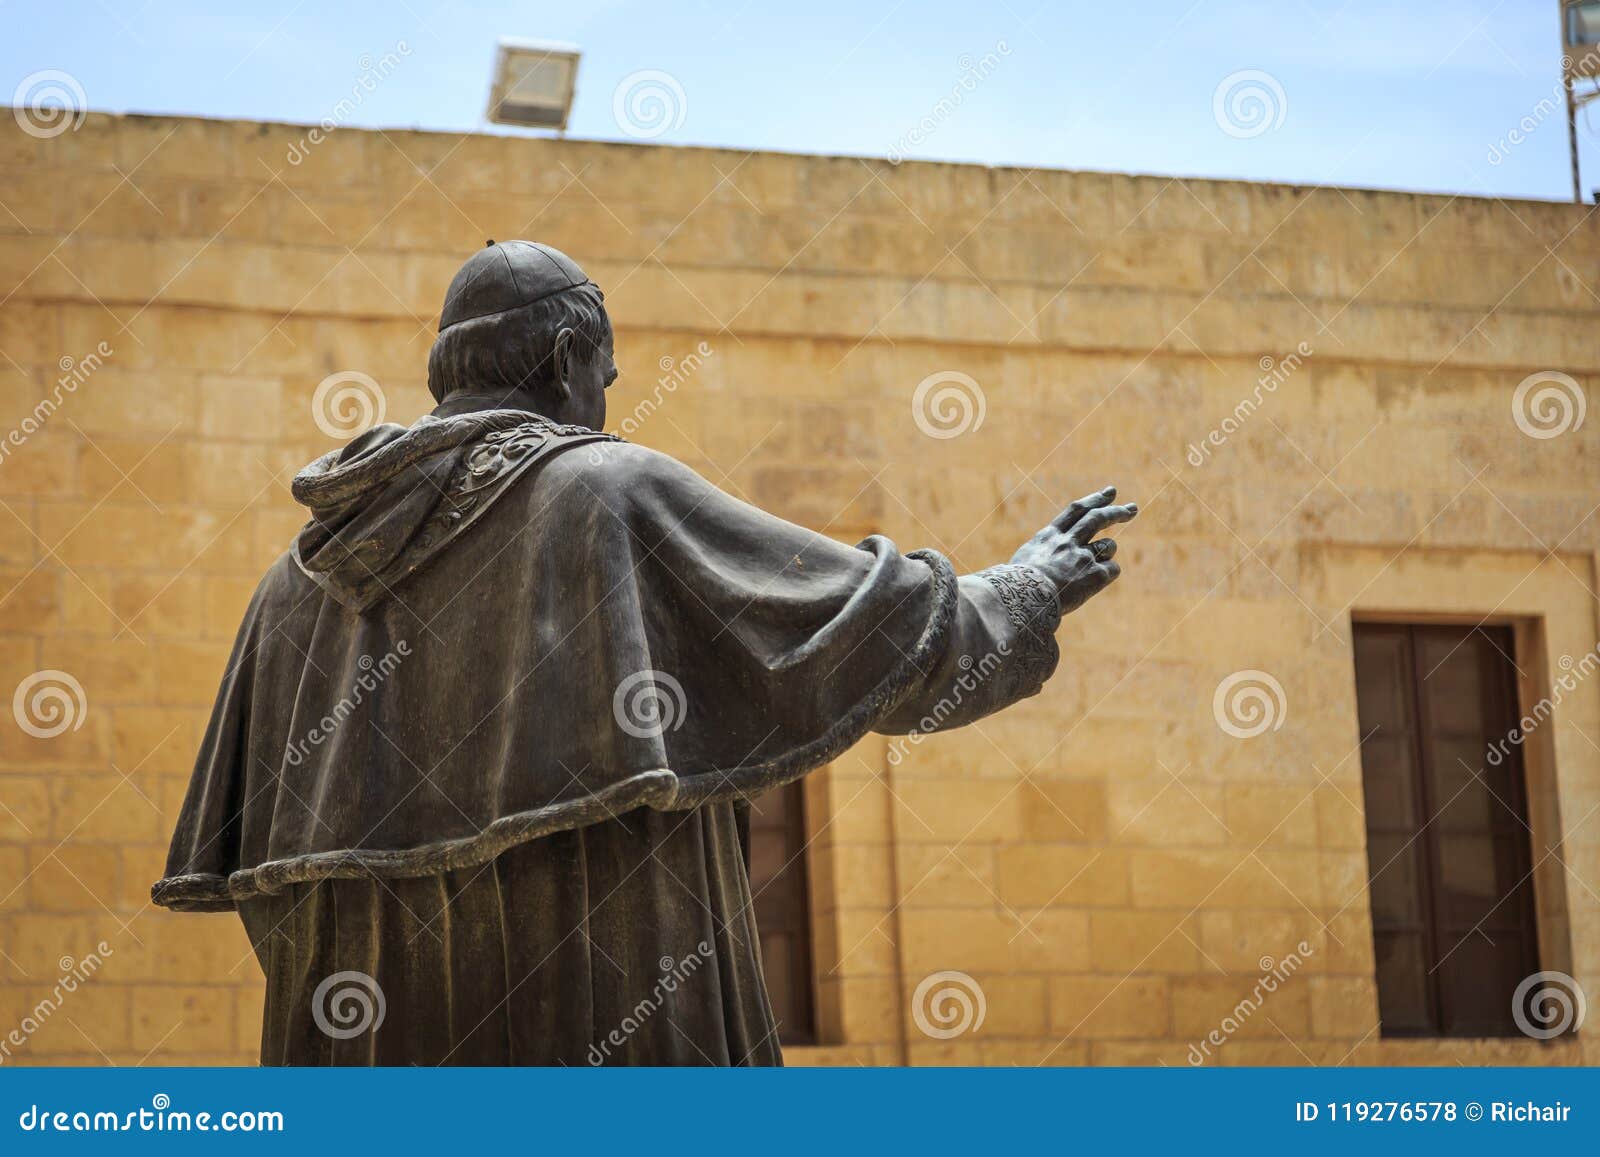 pope john paul ii statue